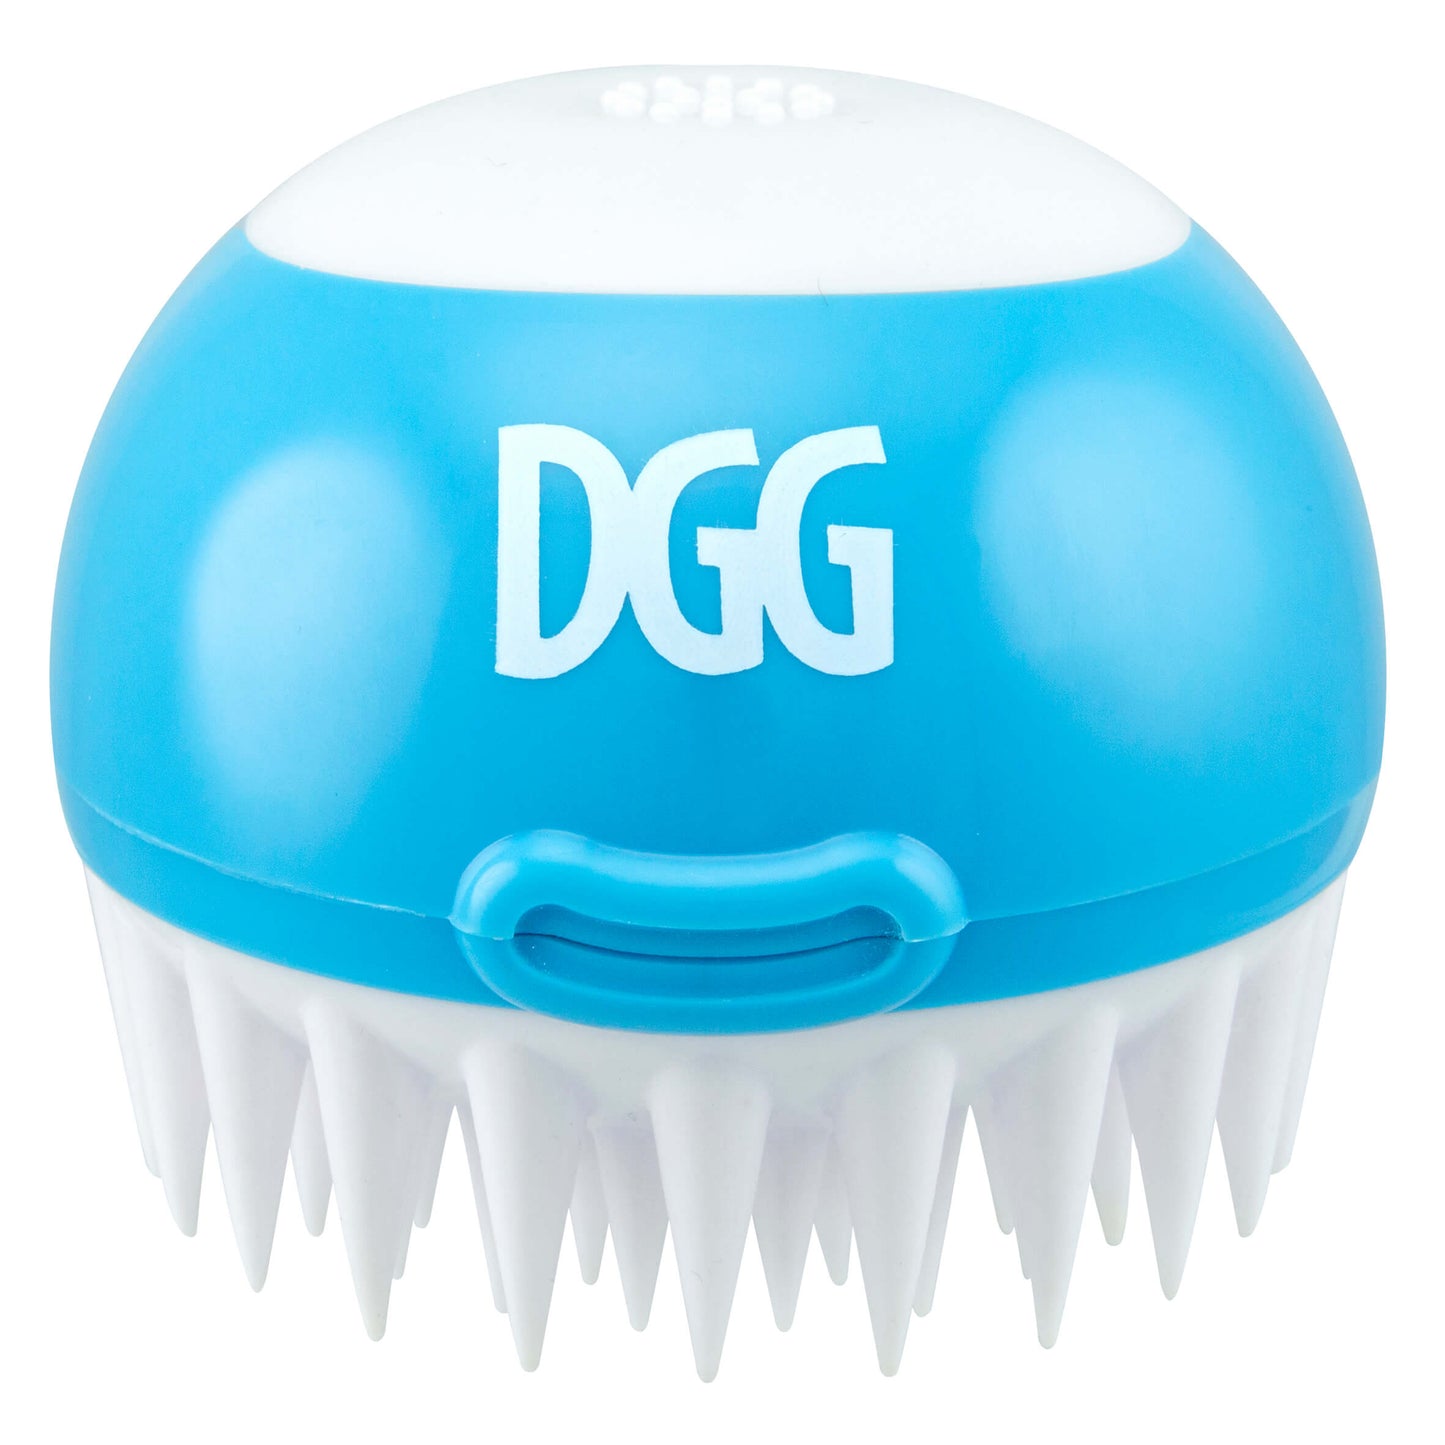 DGG Dog Shampoo Dispensing Washing Brush